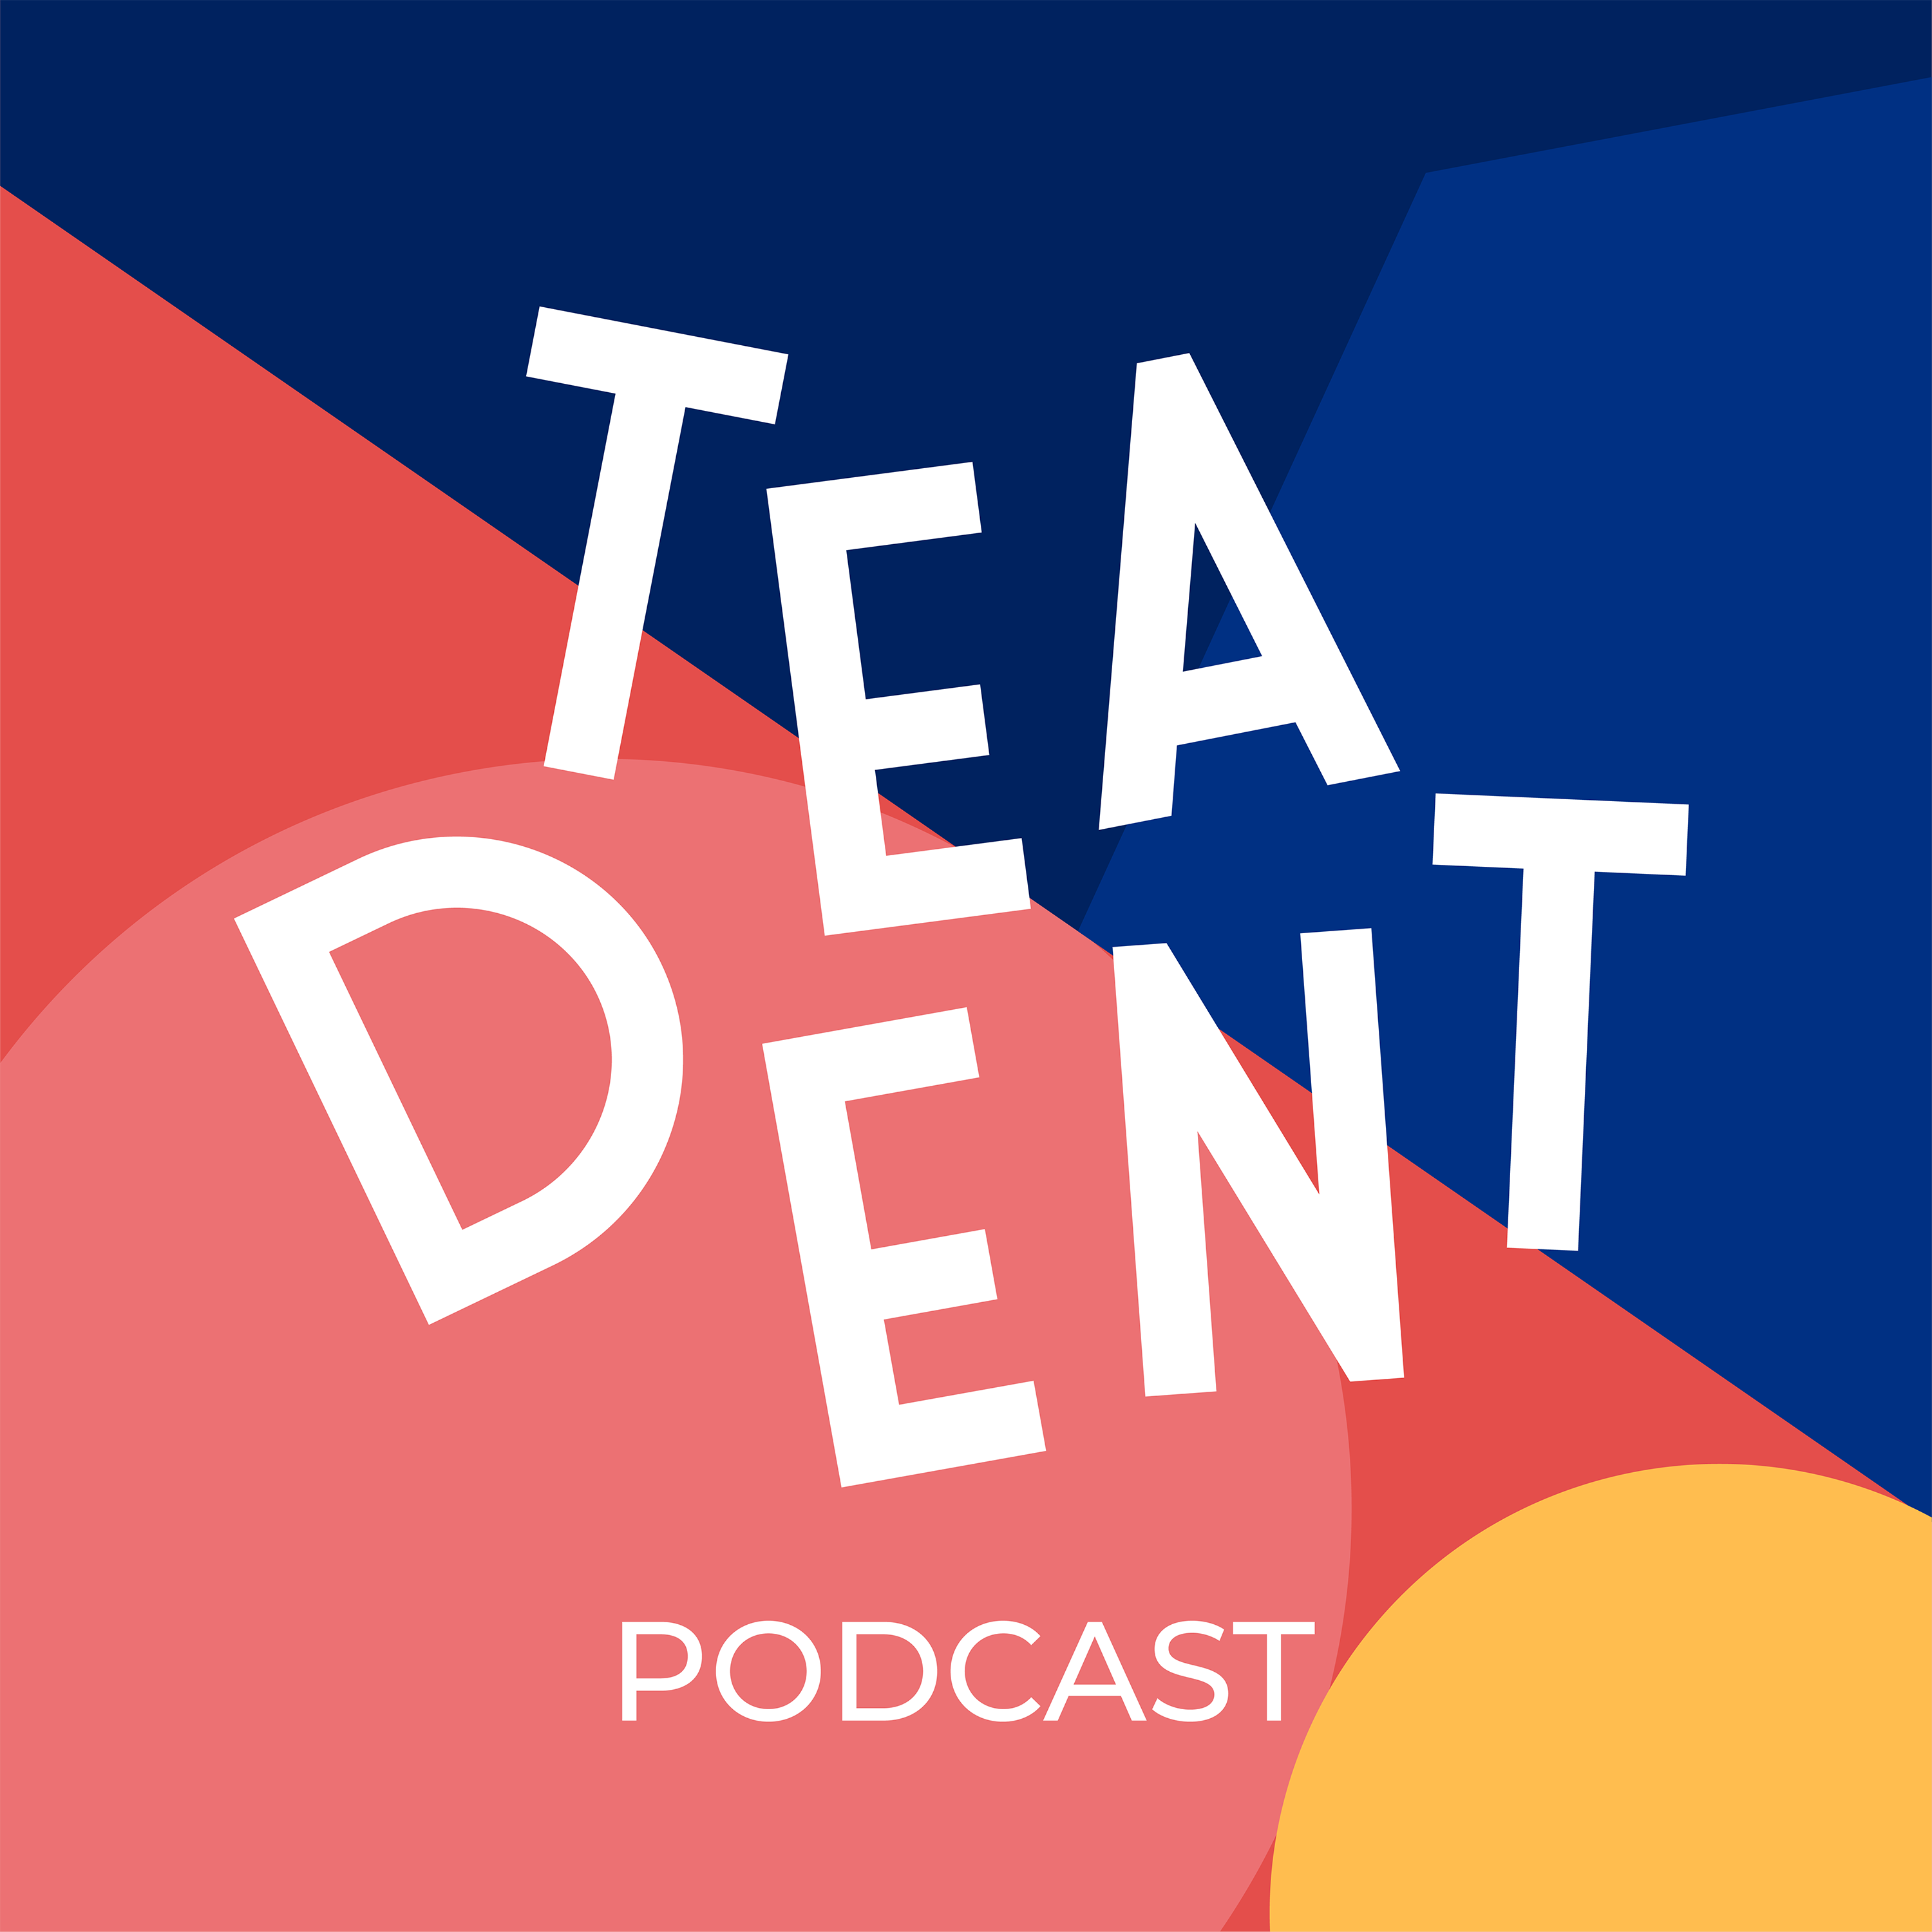 Artwork for podcast The Teadent Podcast